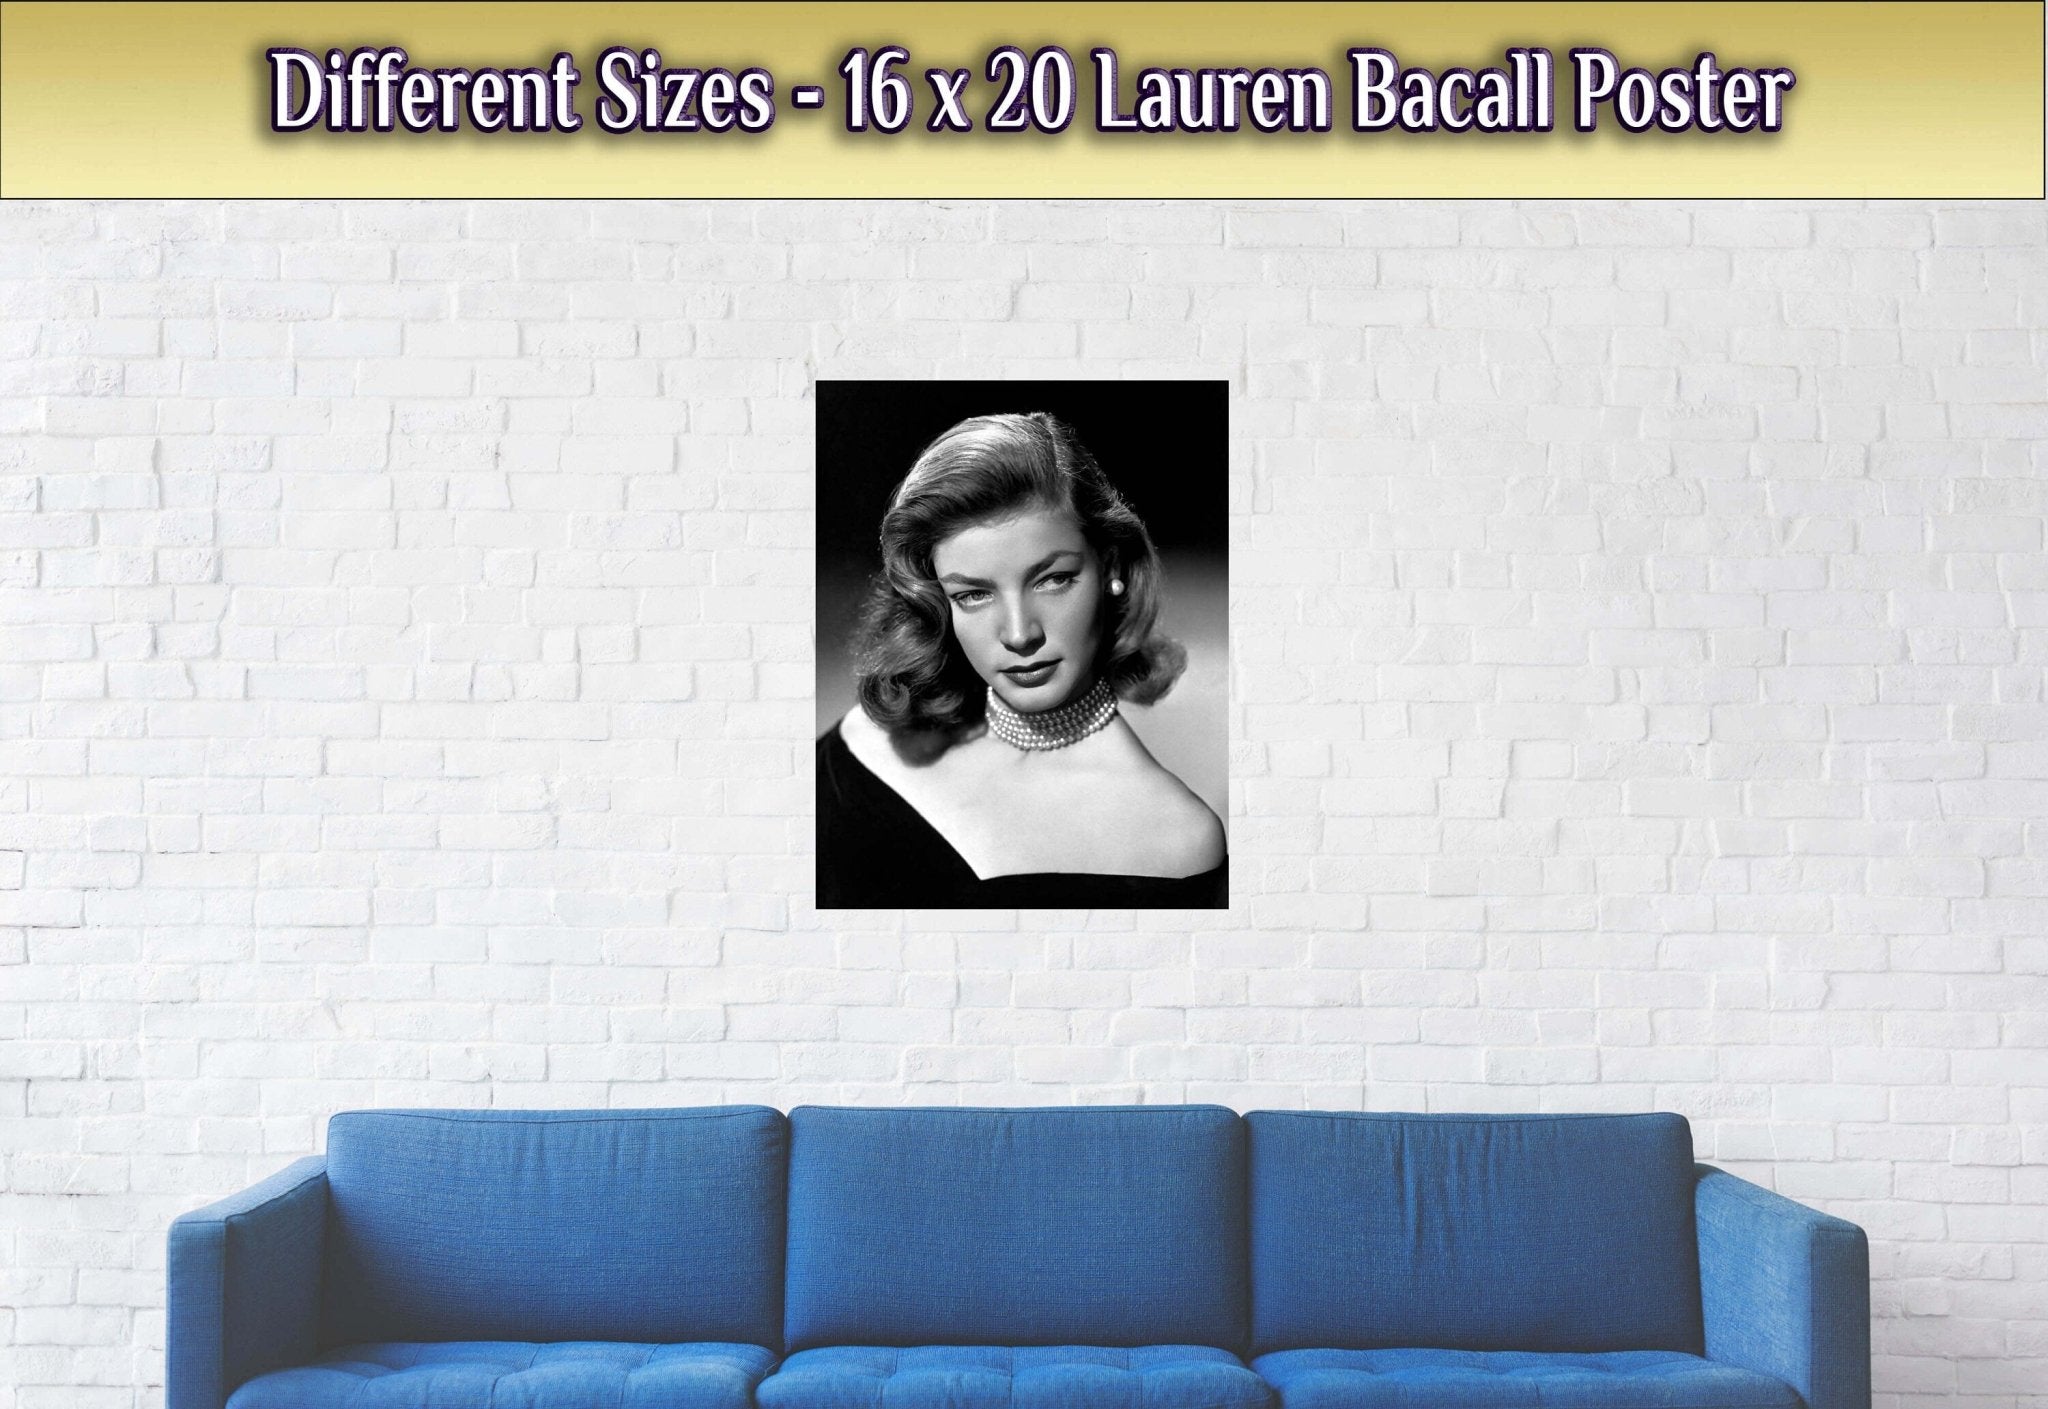 Lauren Bacall Poster, Sexiest Star #6, Vintage Photo - Iconic Lauren Bacall Print - Hollywood Silver Screen Star - WallArtPrints4U